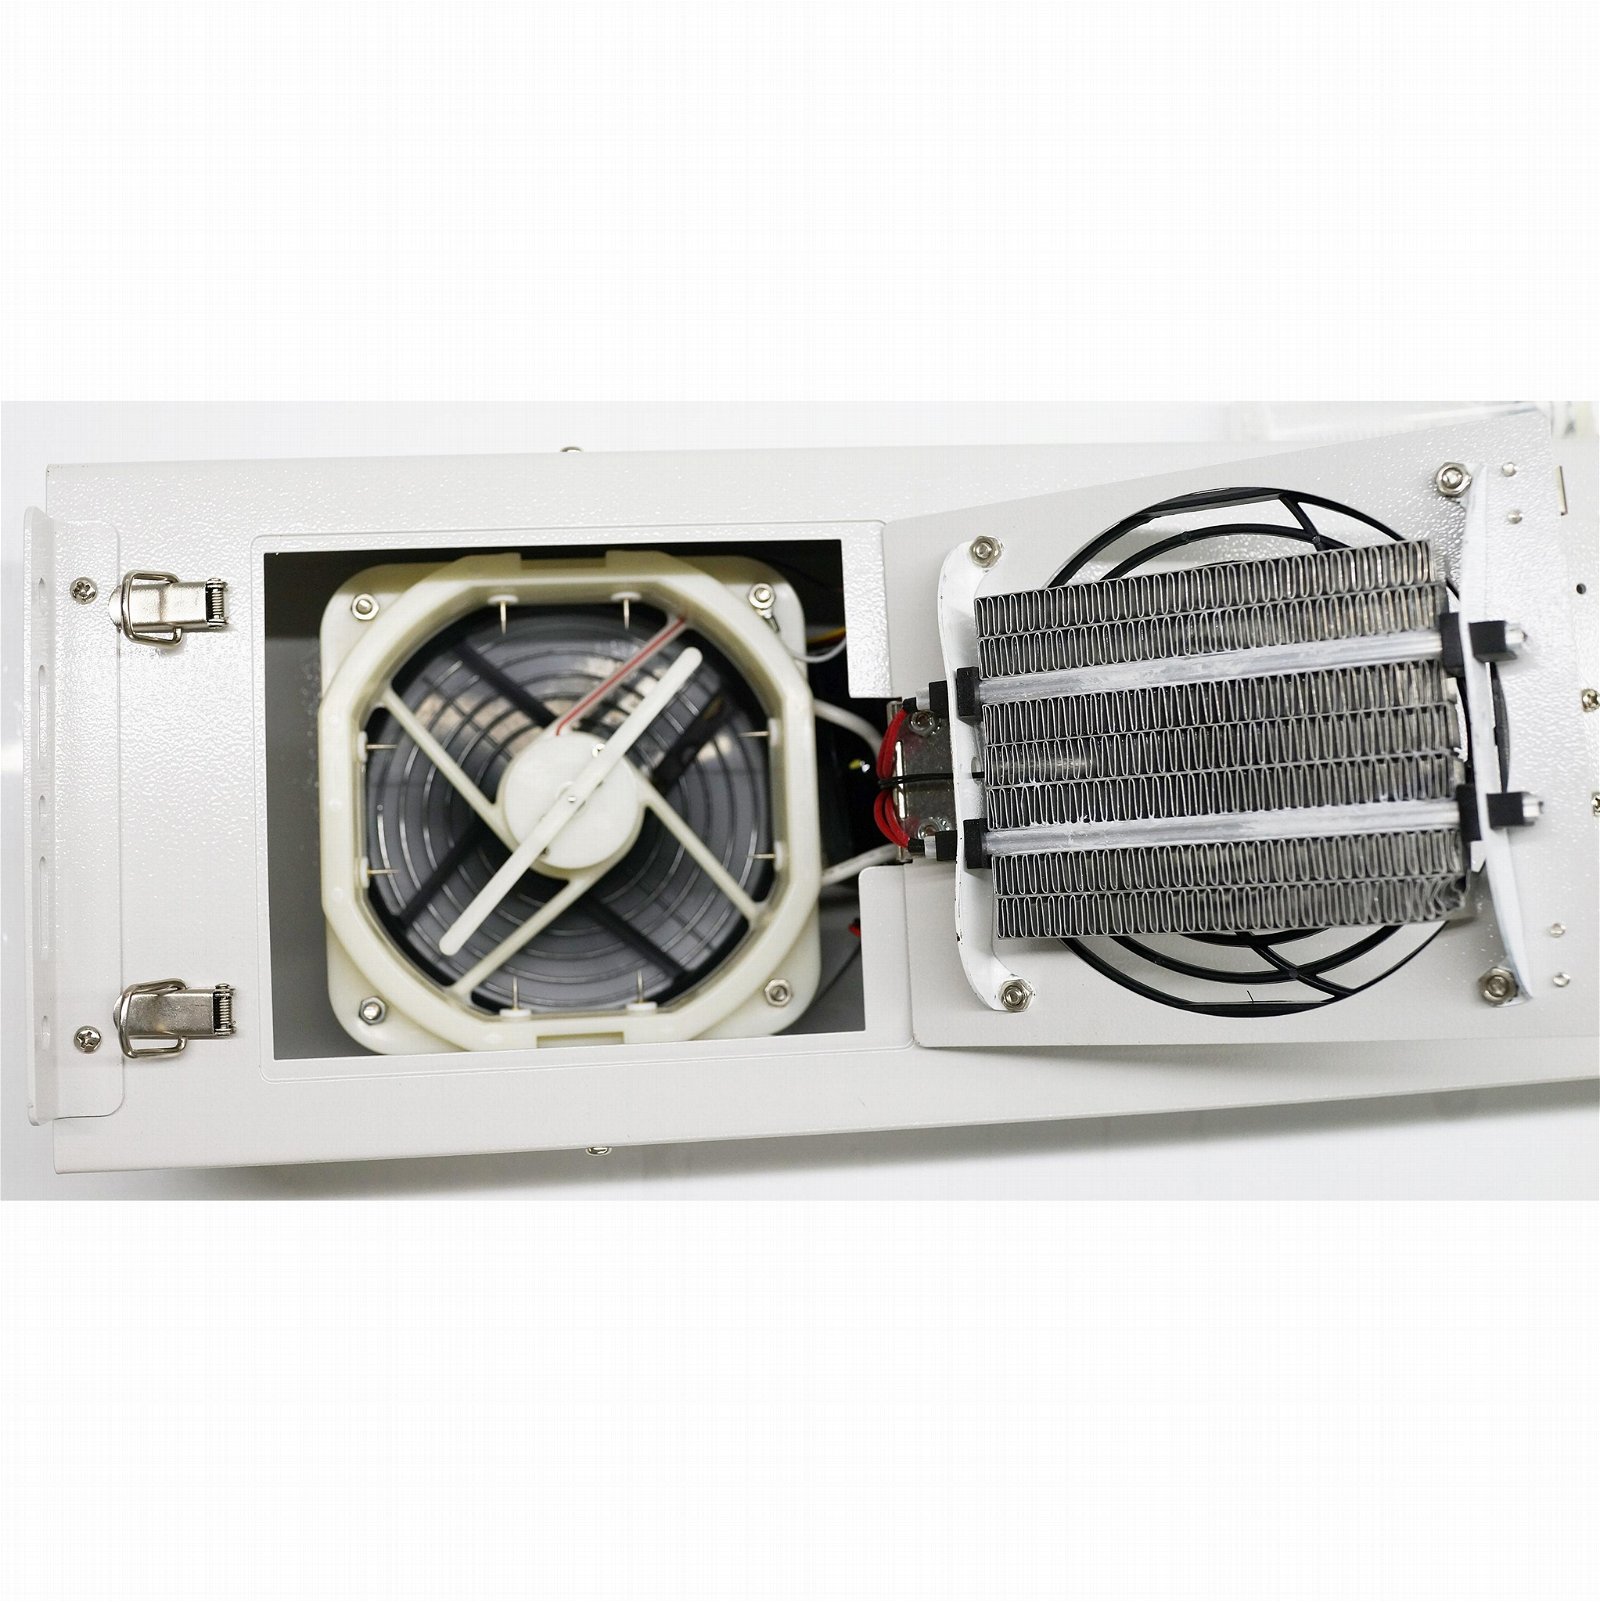 2 fans smart auto clean ion balance monitor ionizer blower 7